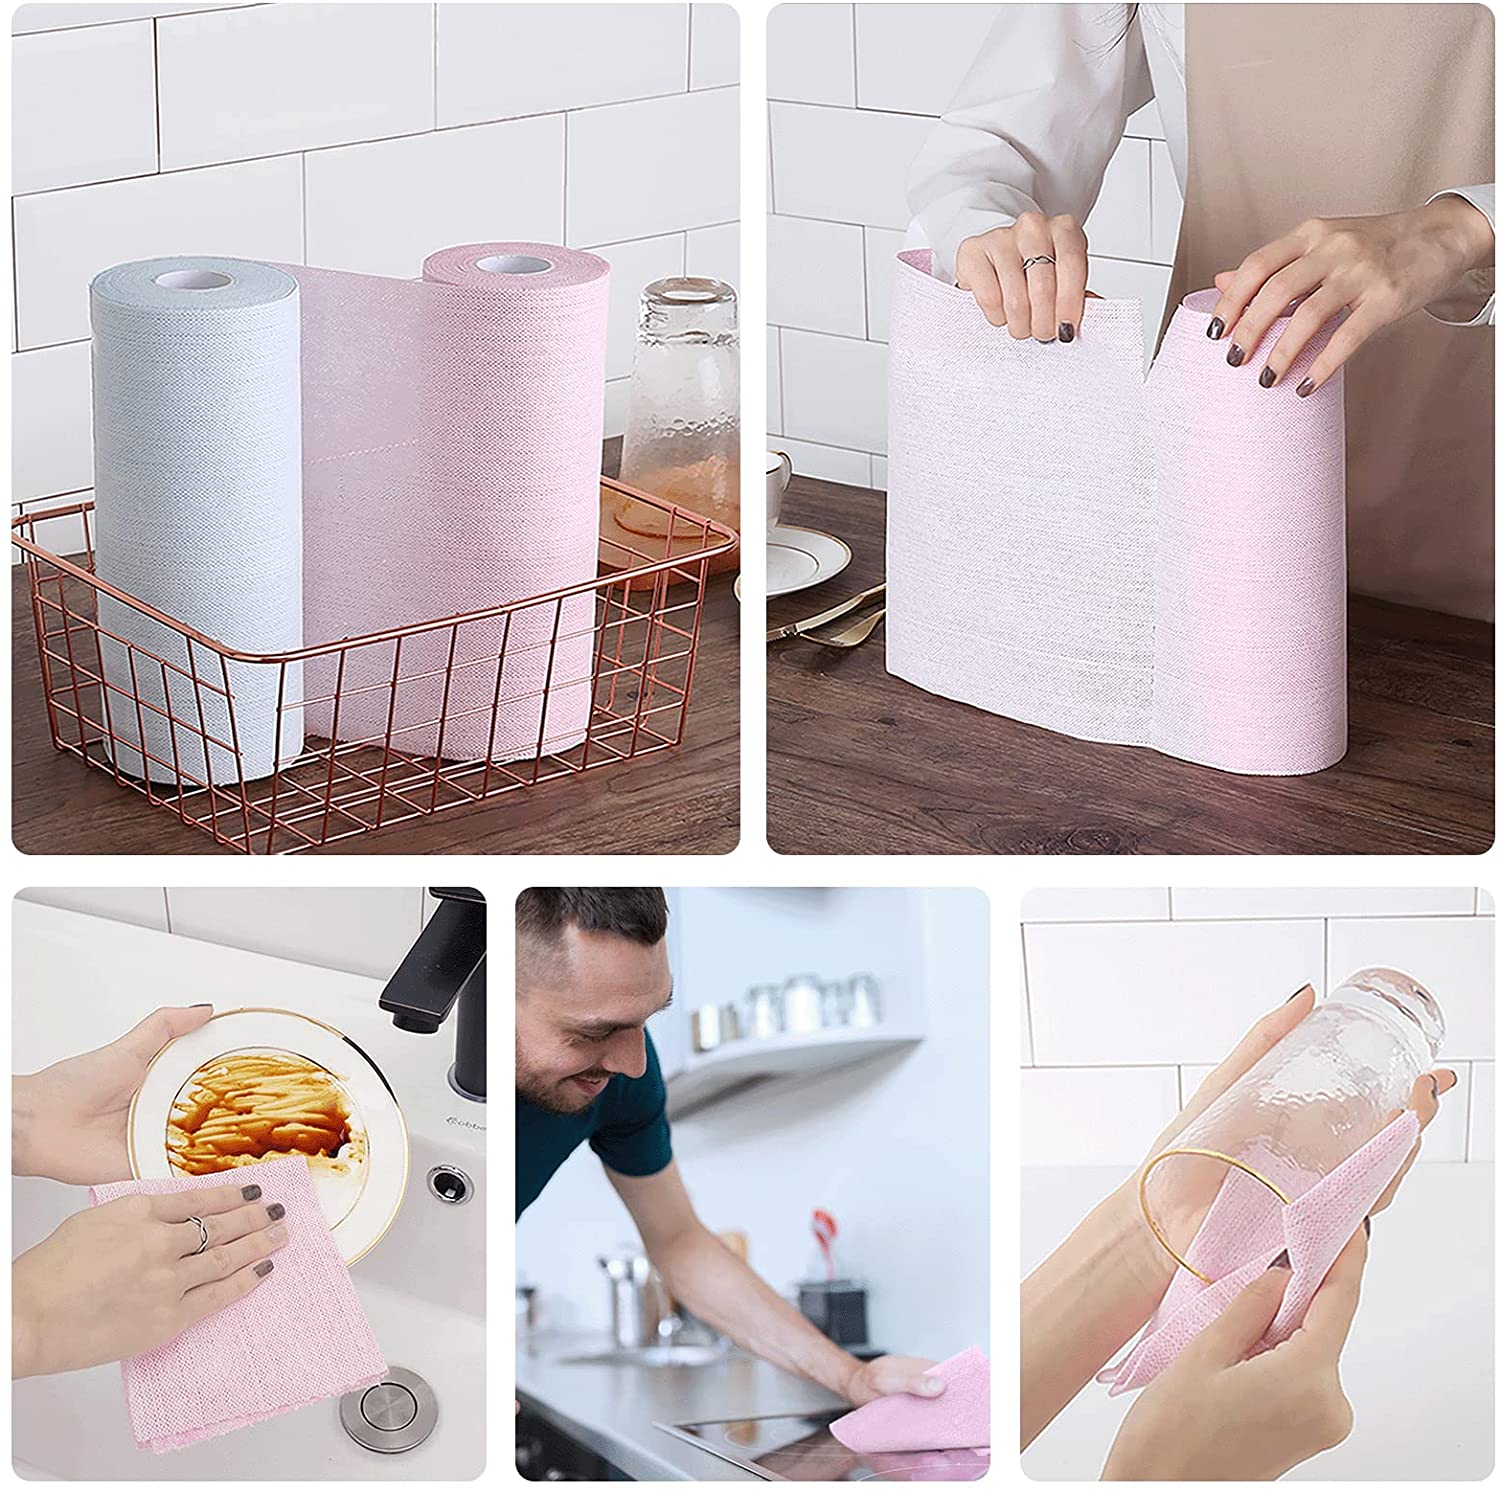 https://bigbigmart.com/wp-content/uploads/2022/05/KitchLife-Reusable-Bamboo-Paper-Towels-3-Rolls-Tricolor-.jpg